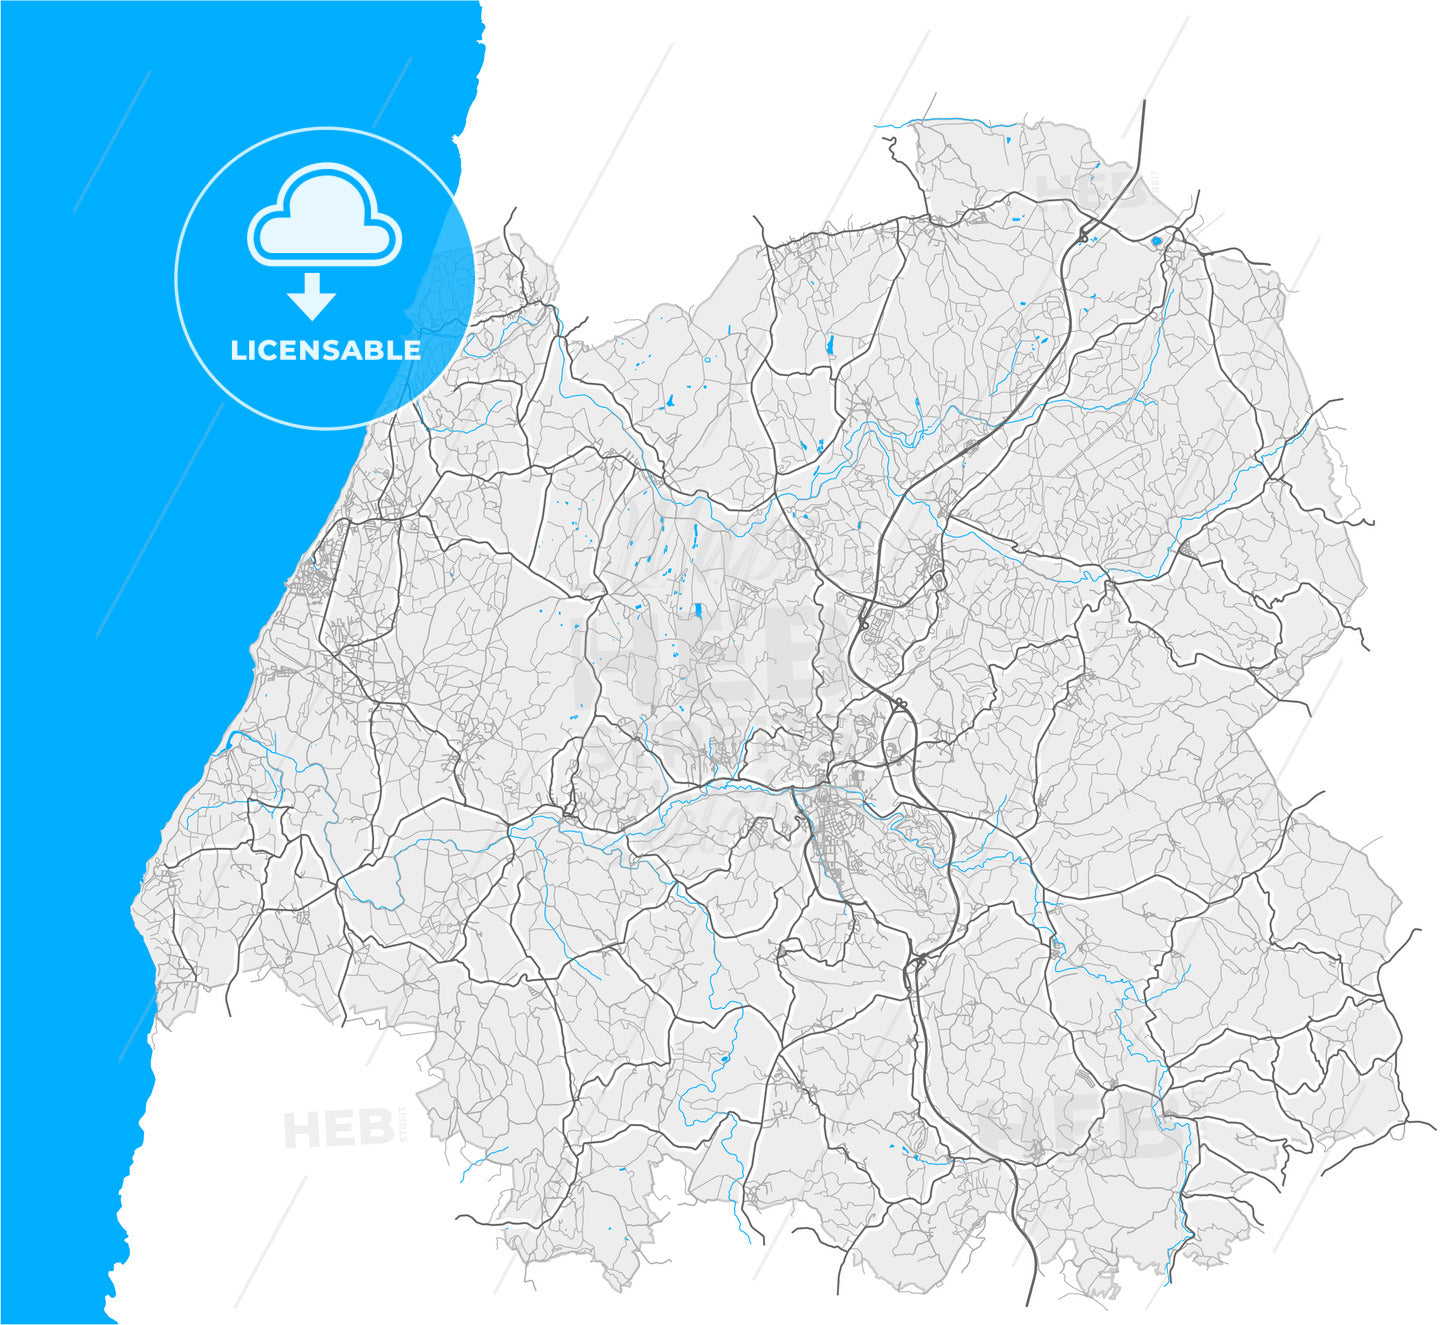 Torres Vedras, Lisbon, Portugal, high quality vector map